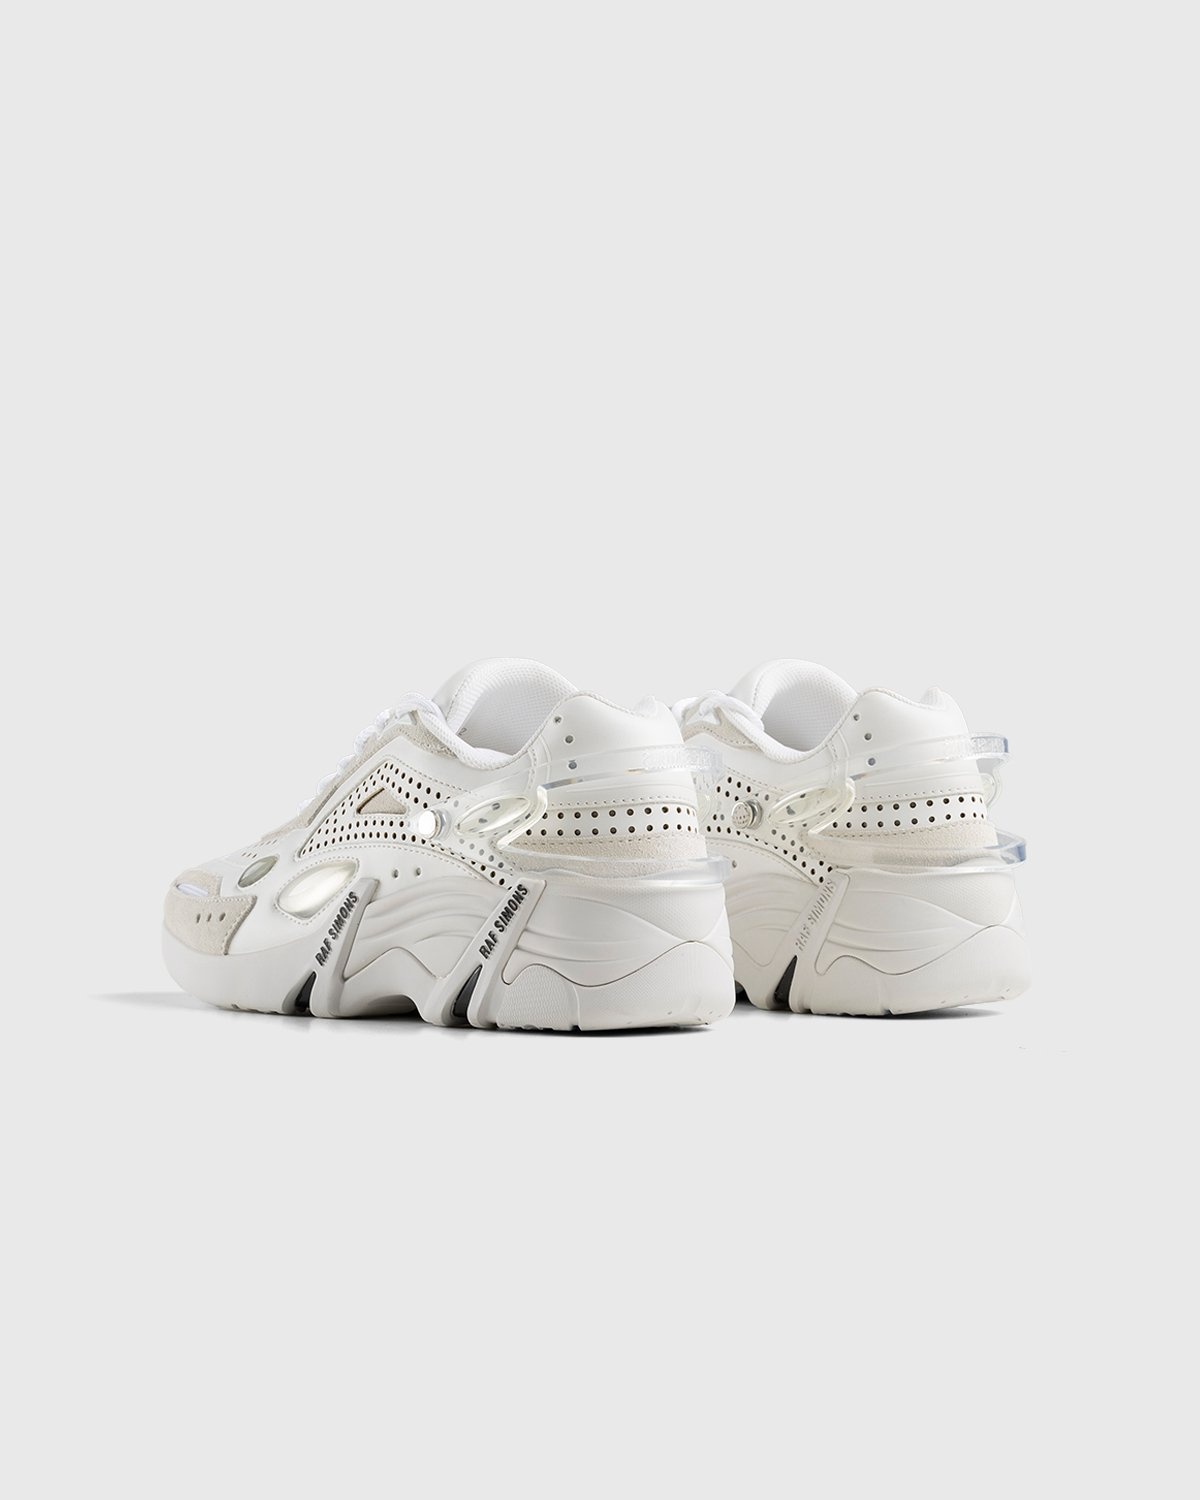 Raf Simons – Cylon 21 White - Sneakers - White - Image 4